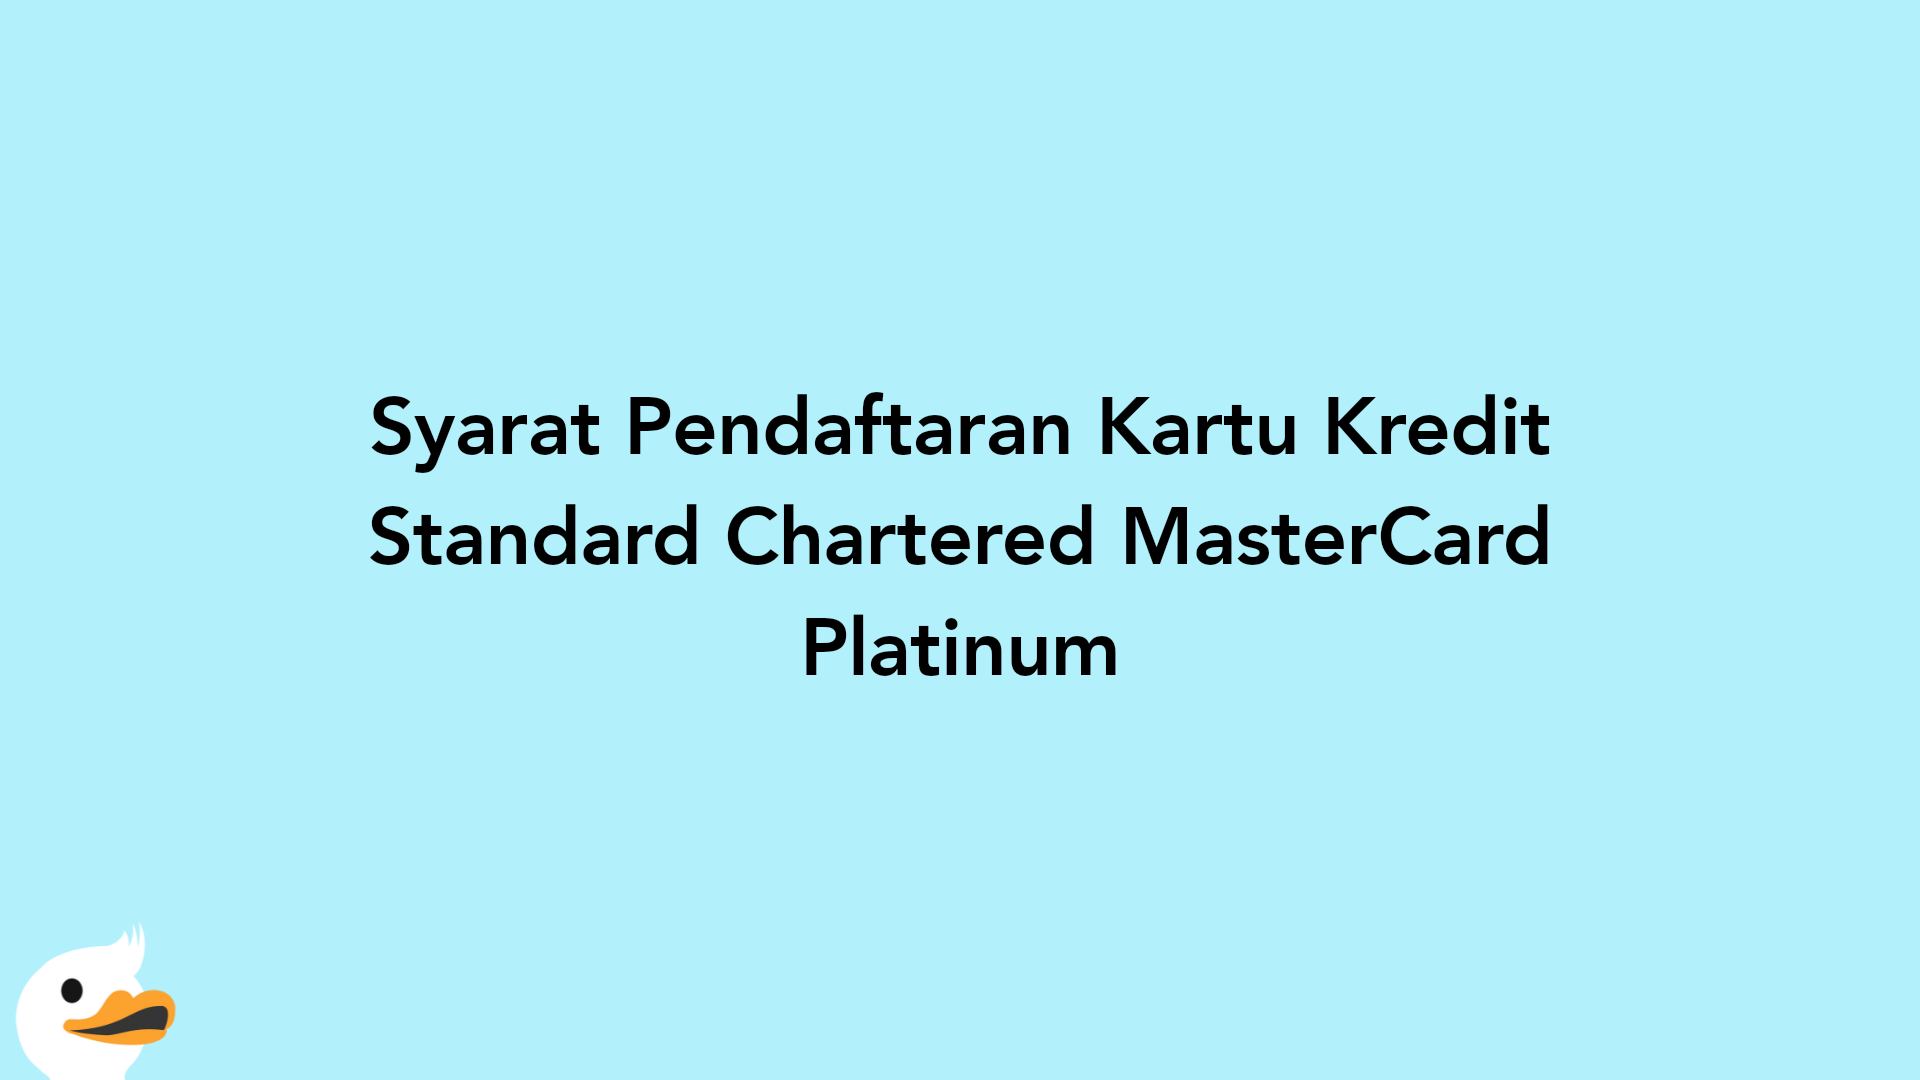 Syarat Pendaftaran Kartu Kredit Standard Chartered MasterCard Platinum